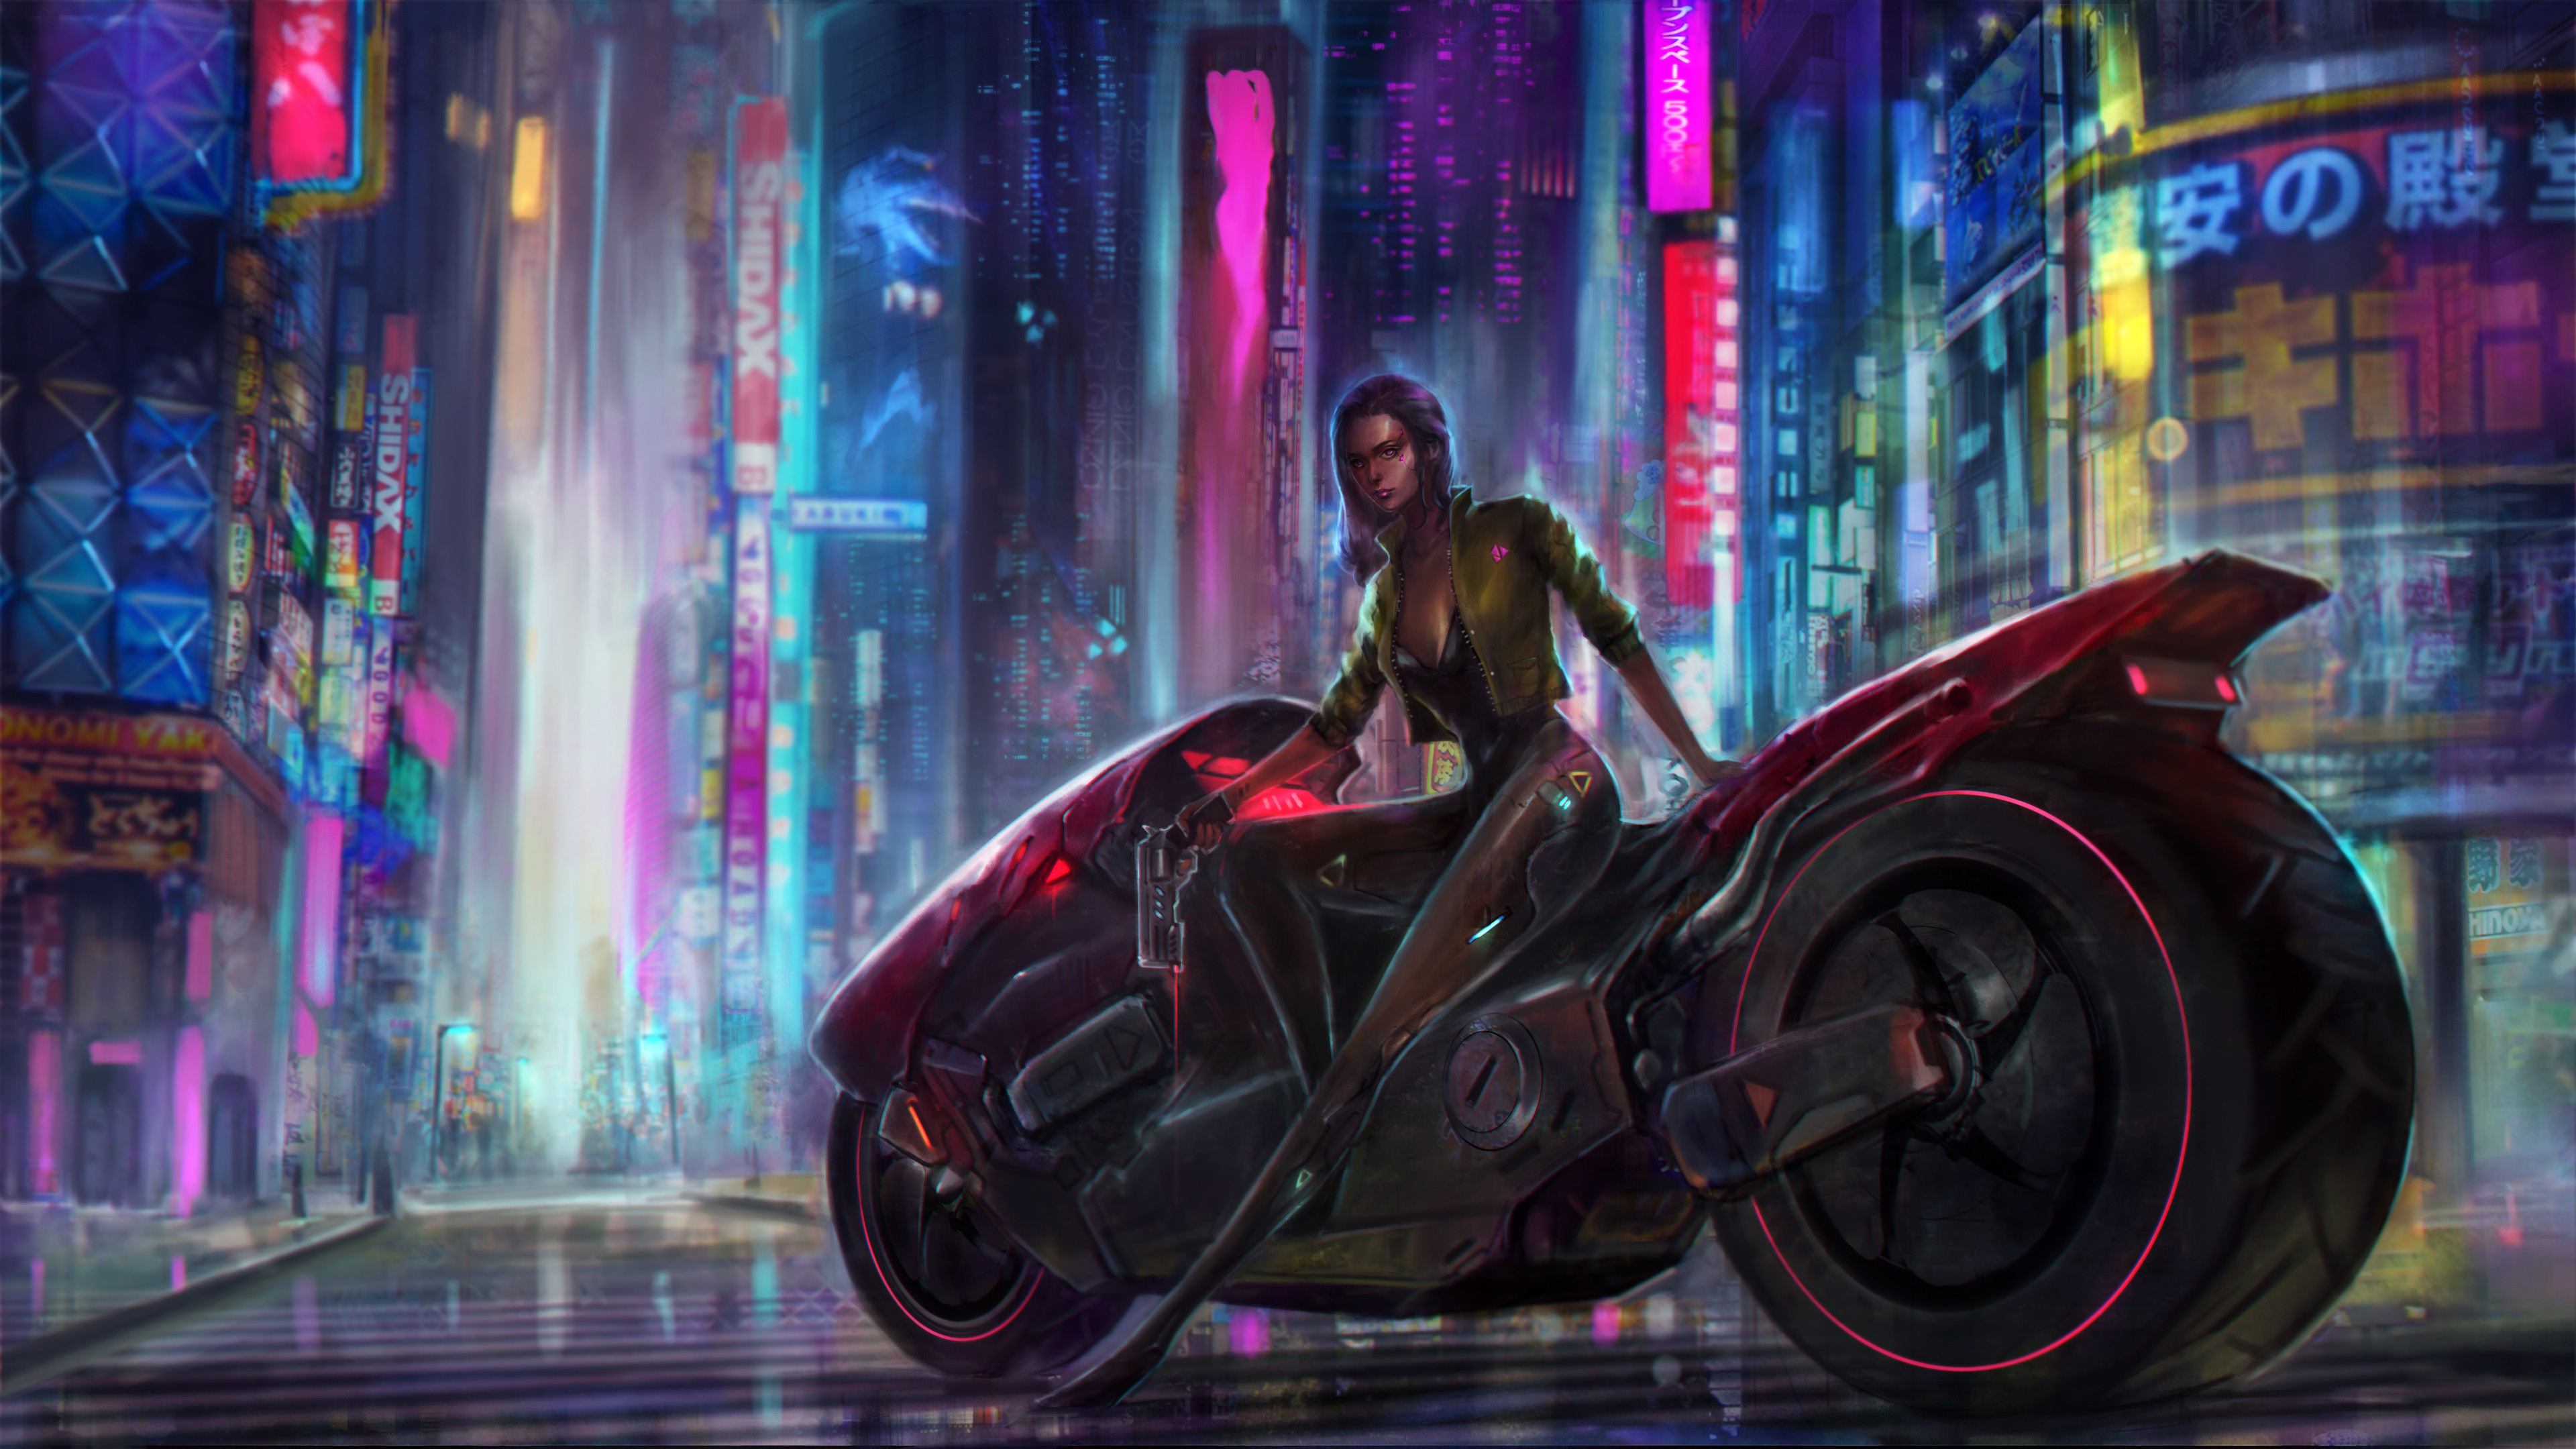 futuristic, cyberpunk, cyborg, sci fi, motocycle, vehicle